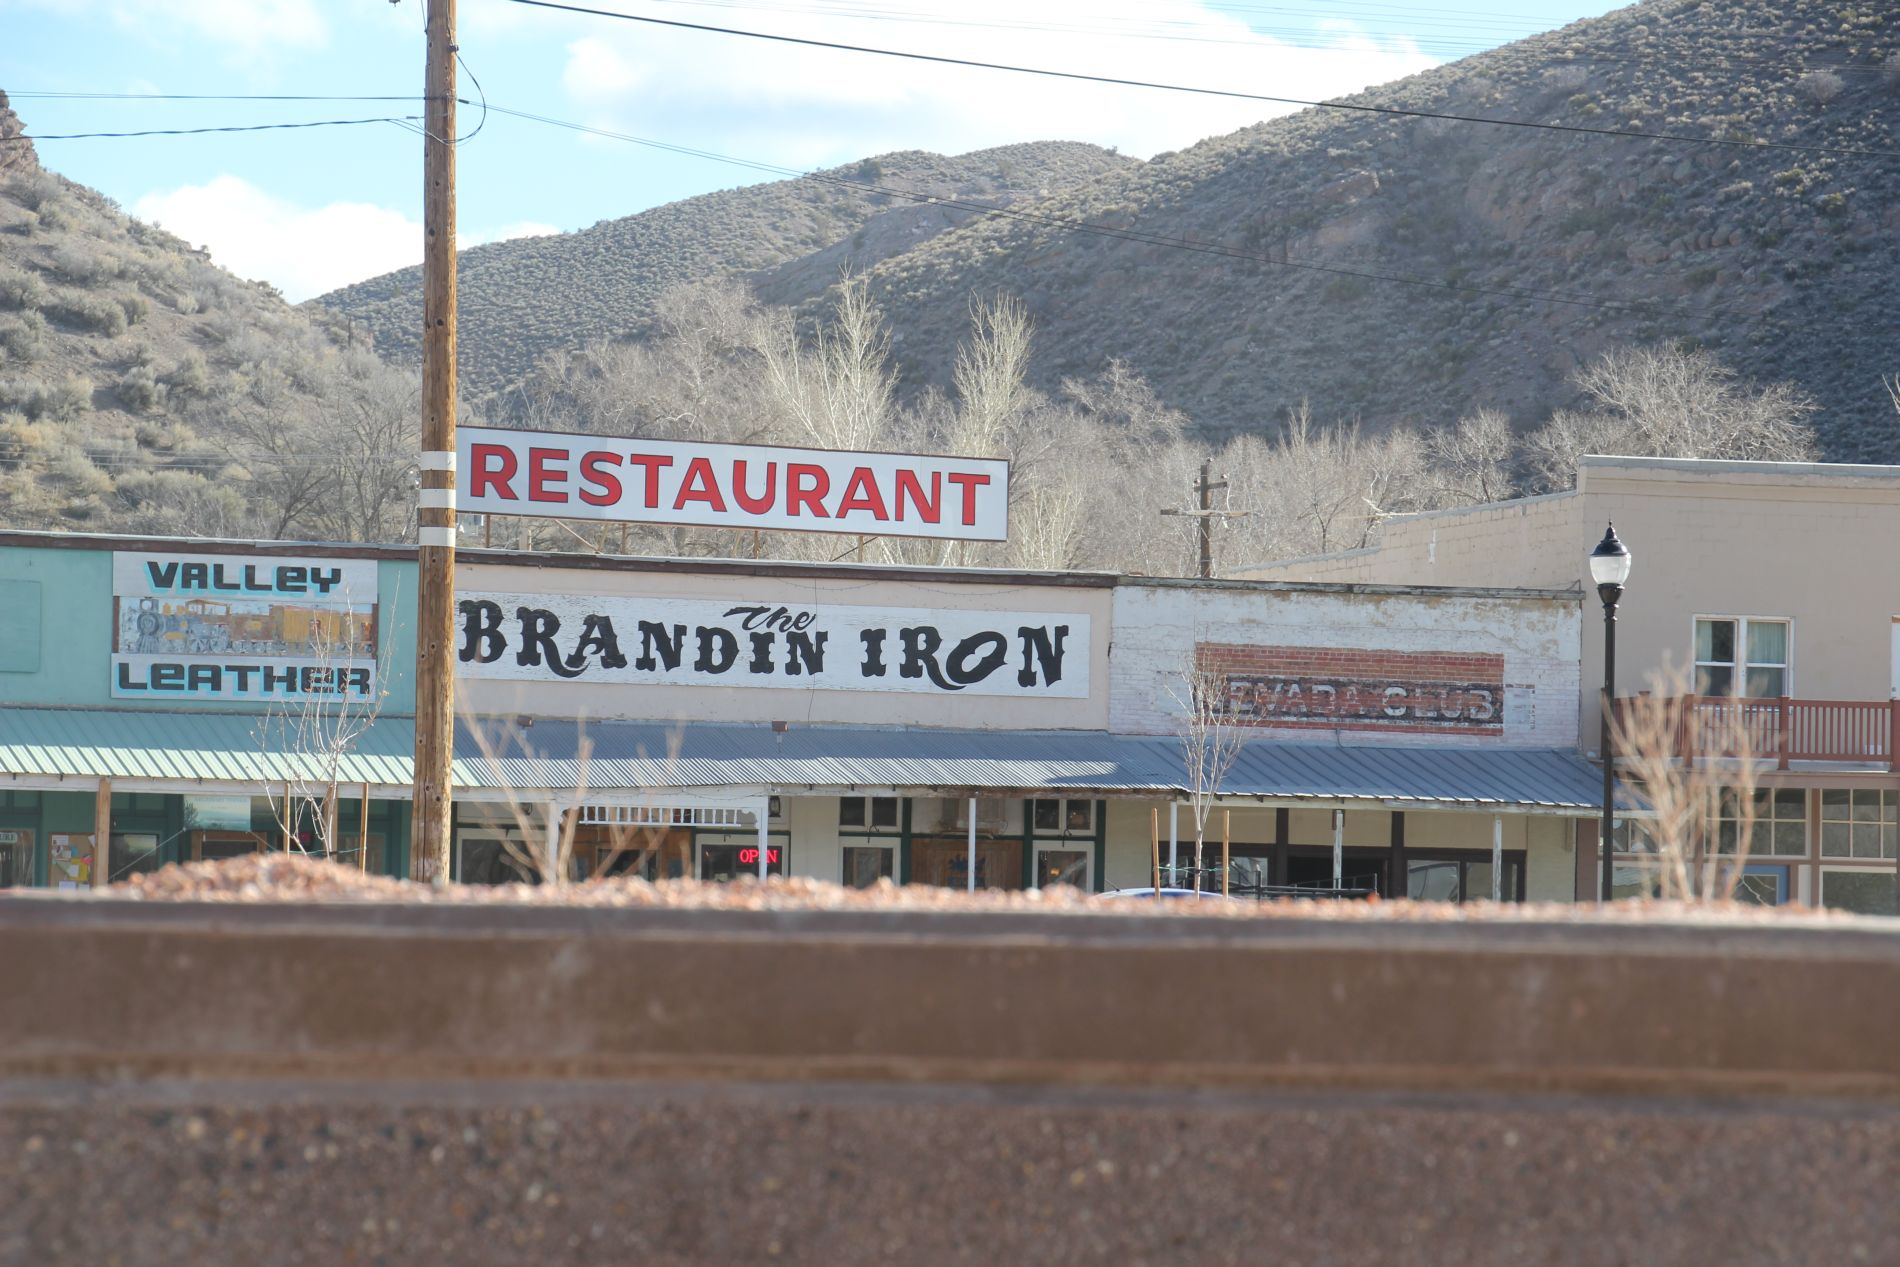 Brandin Iron restaurant in Caliente, Nevada